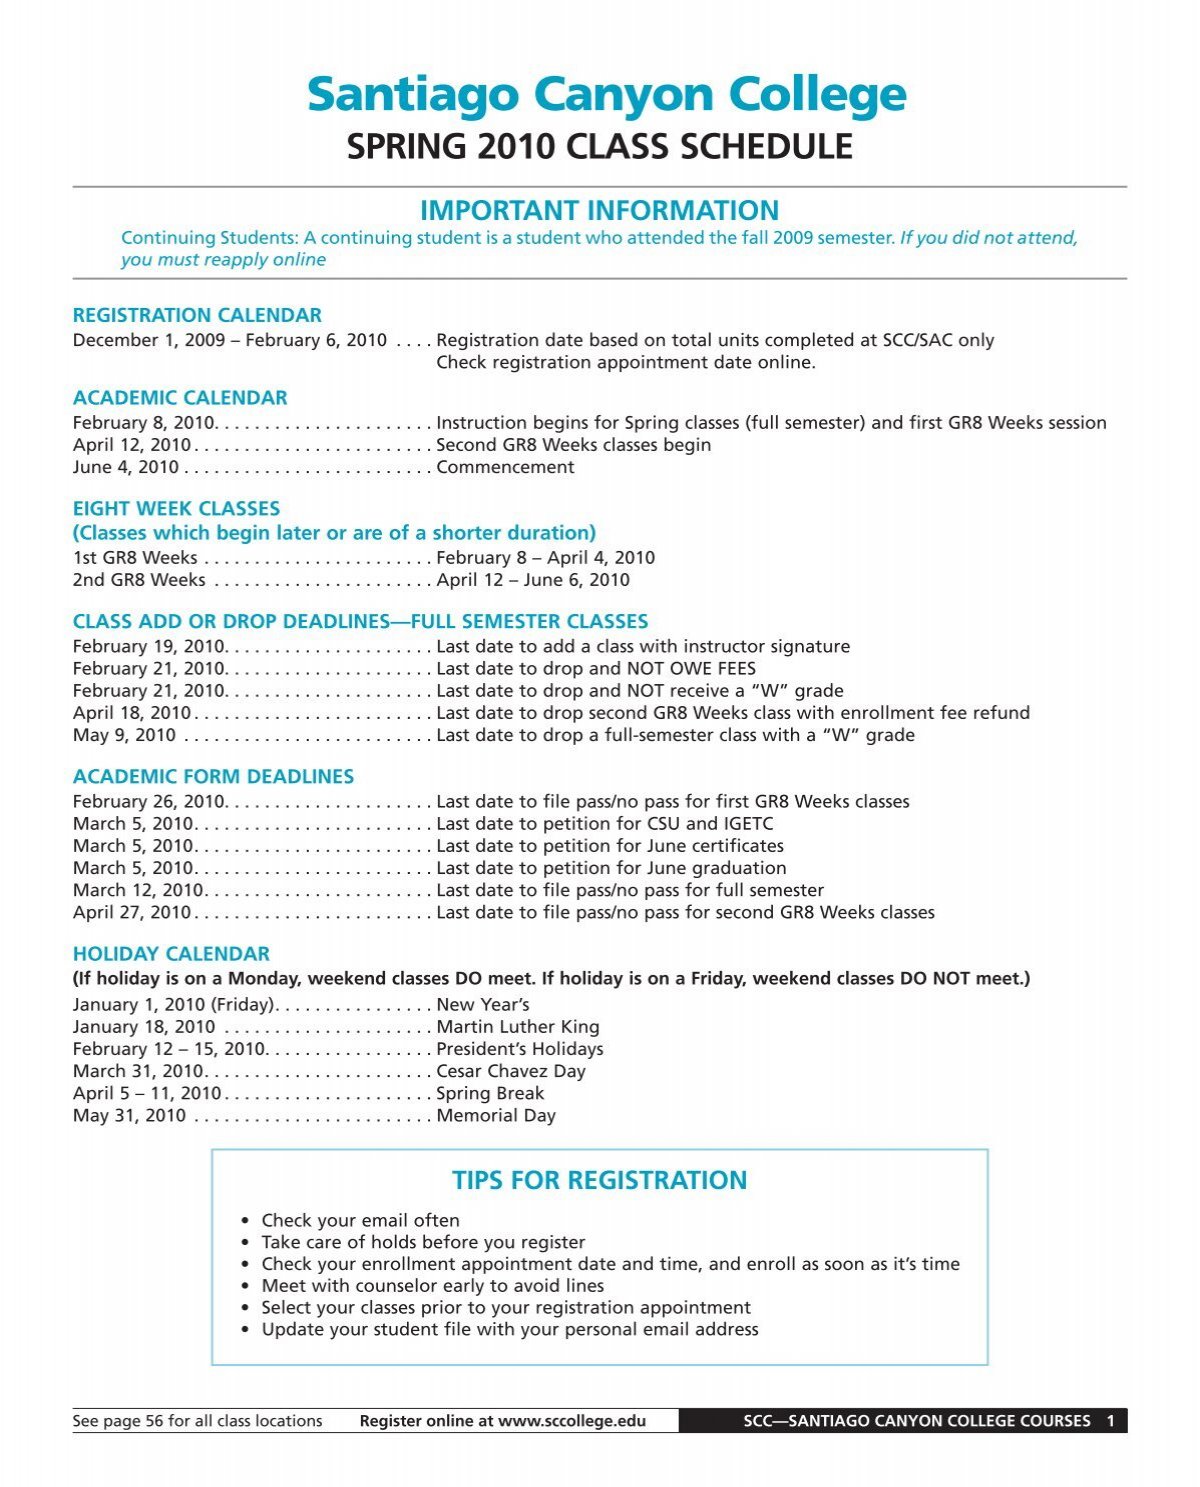 SCC_Spring_10_schedule - Santiago Canyon College